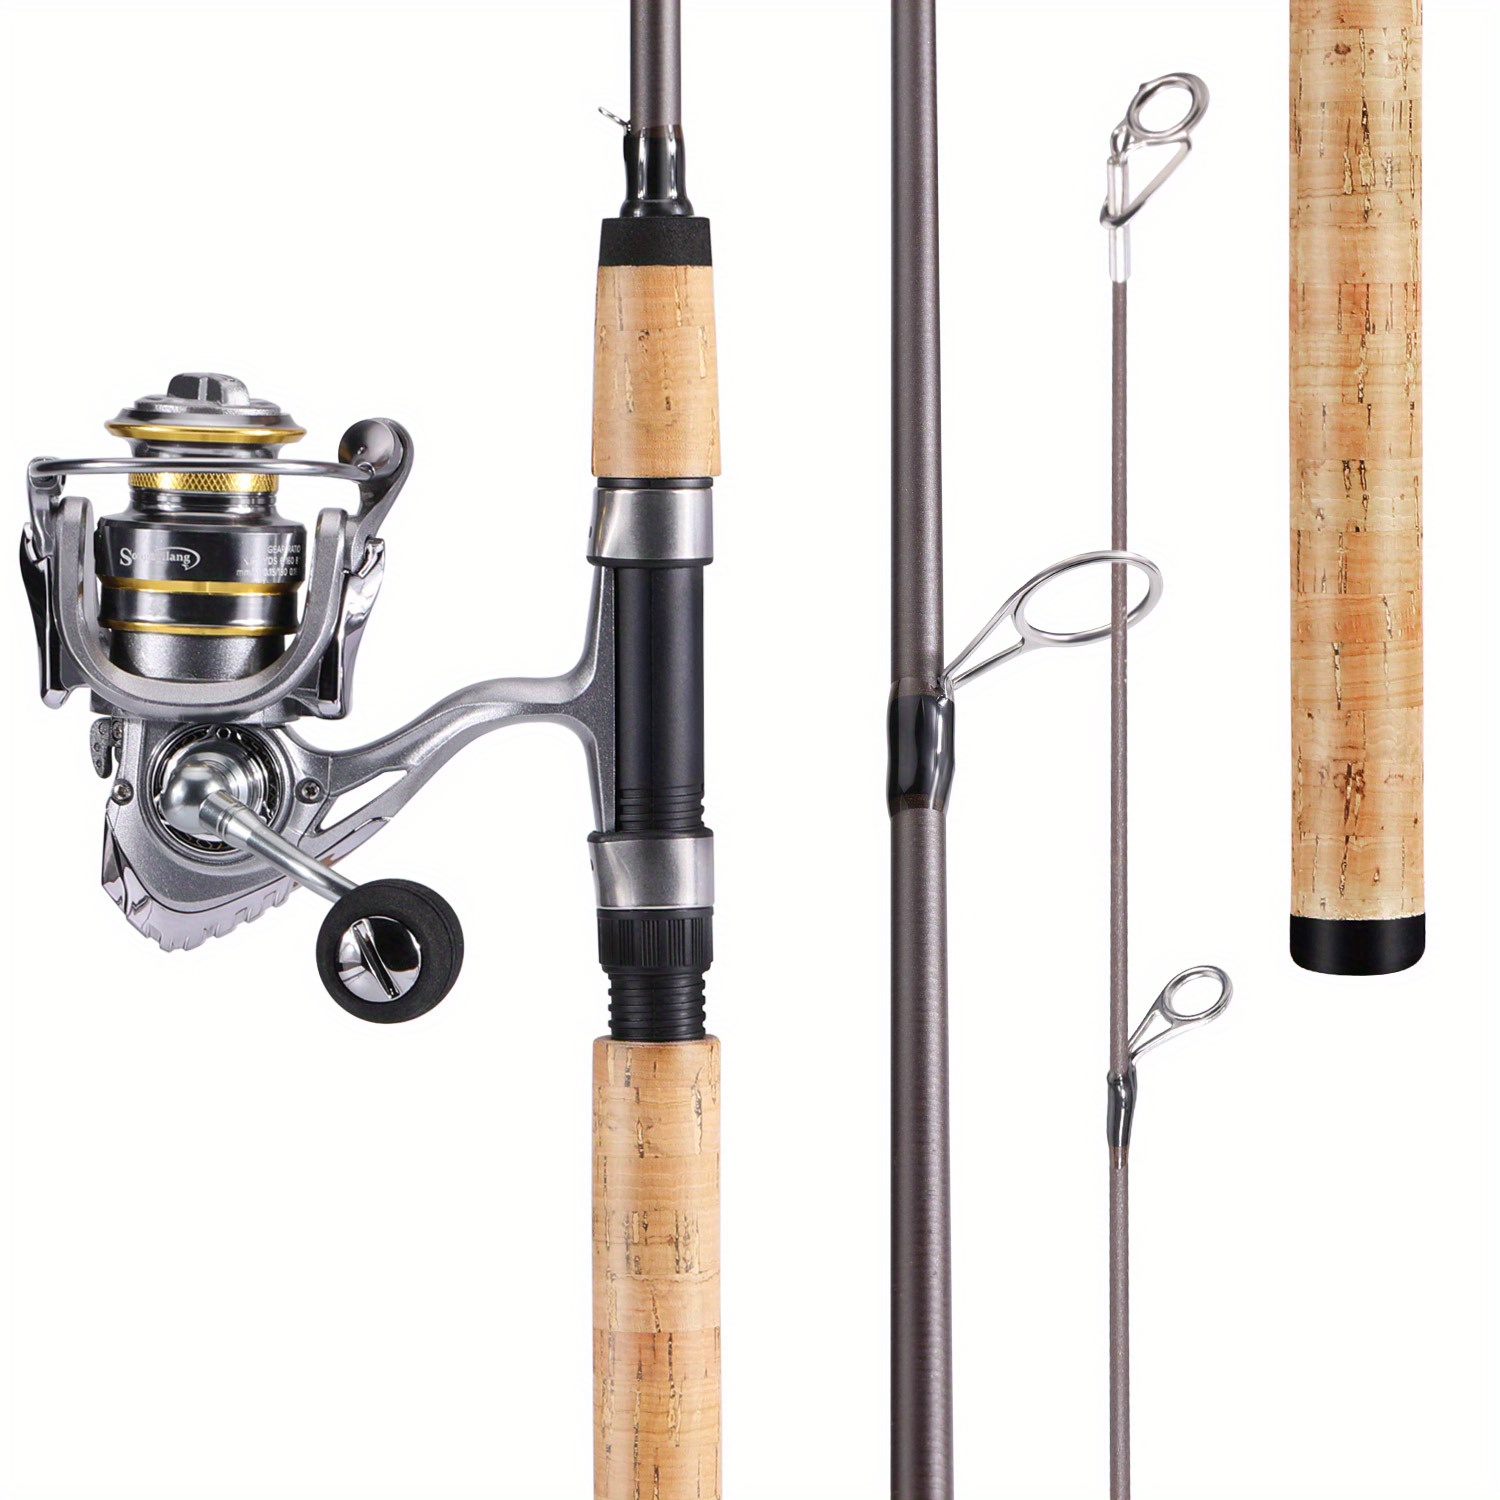 Richcat Fishing Poles and Reels Combo, Fishing Rod and Reel Kits